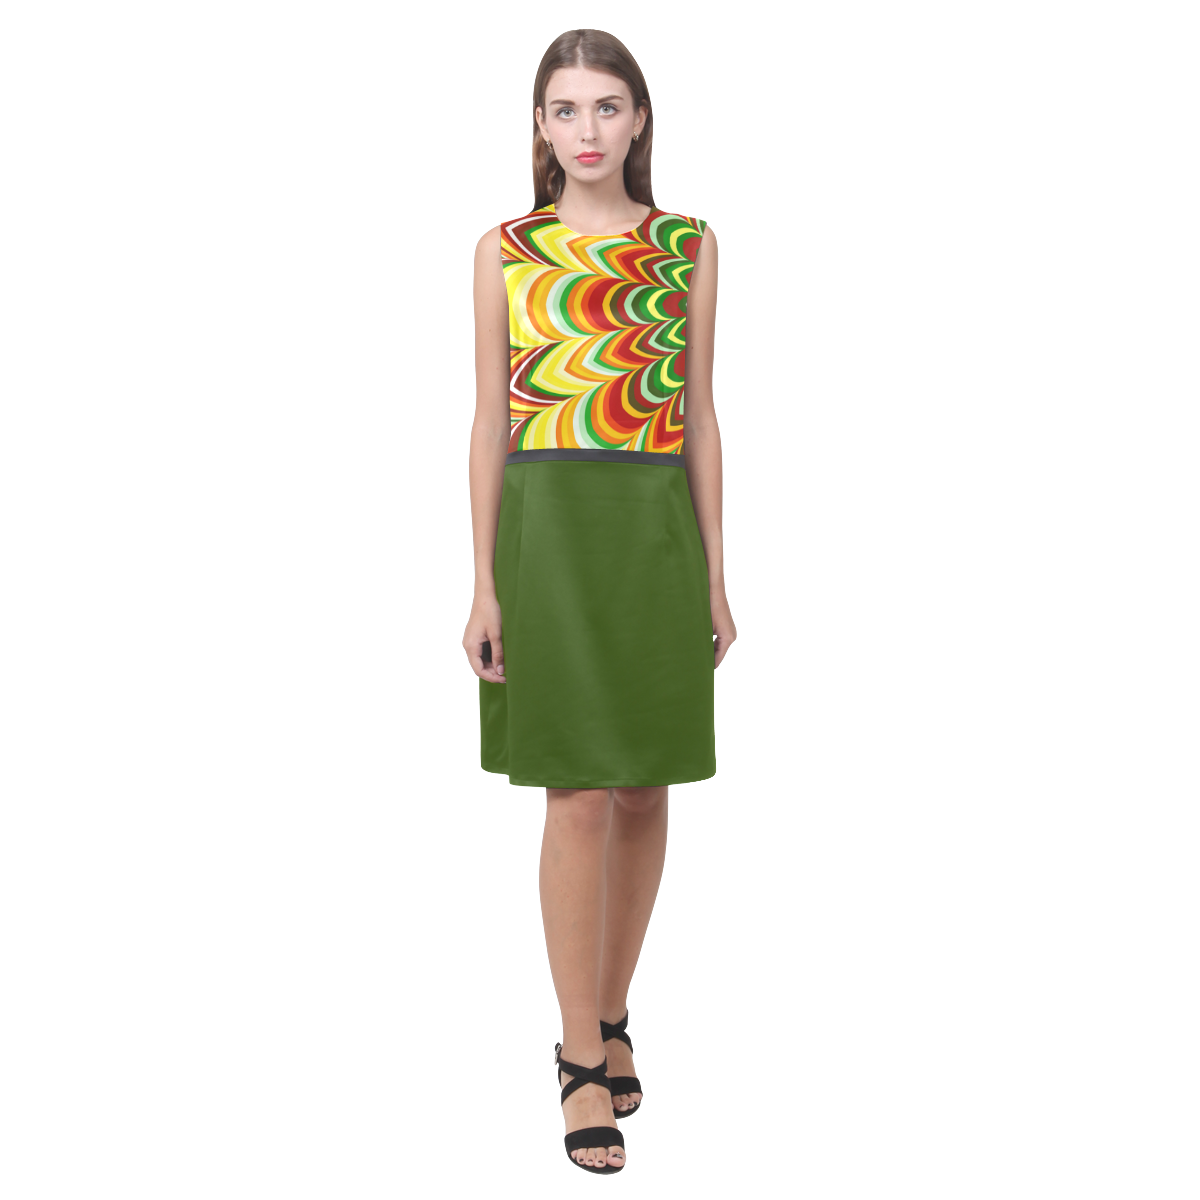 Colorful striped pattern Asymmetric, Green Skirt Version Eos Women's Sleeveless Dress (Model D01)